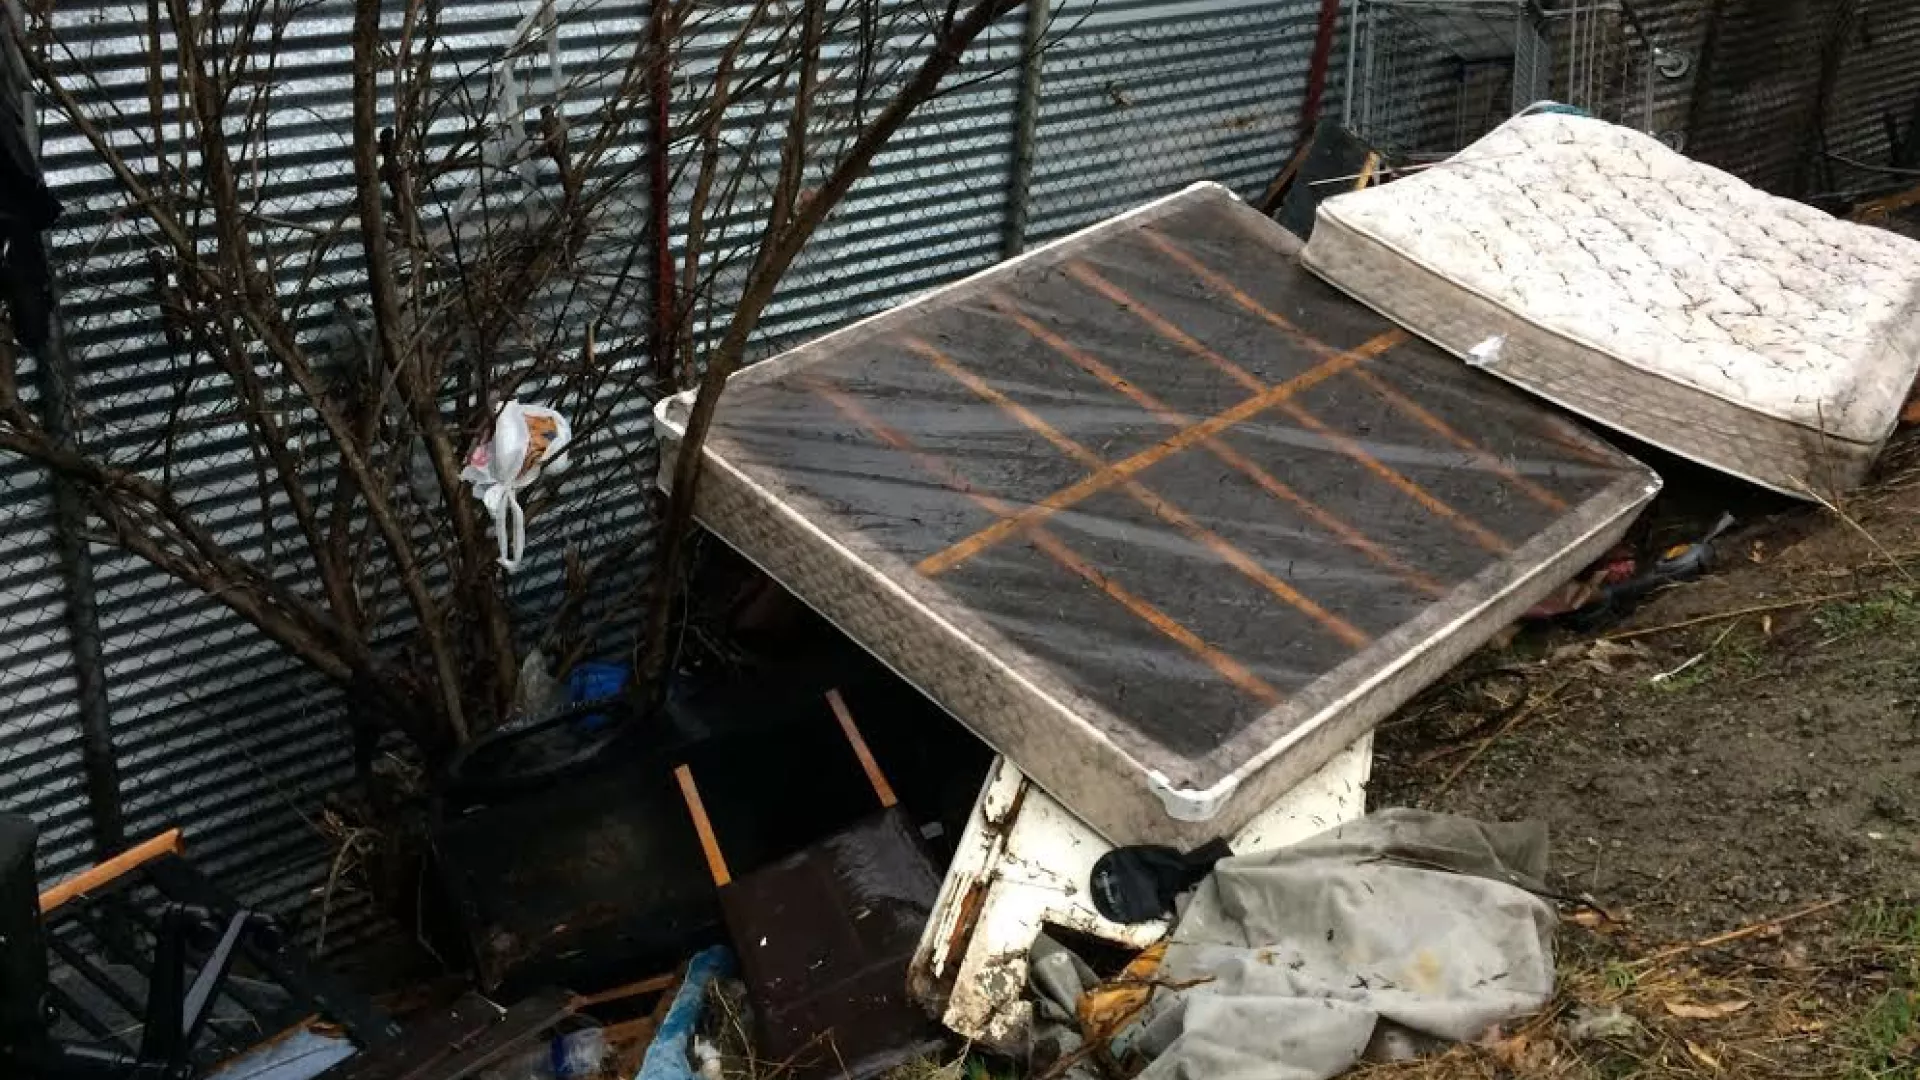 Abandoned mattress on street